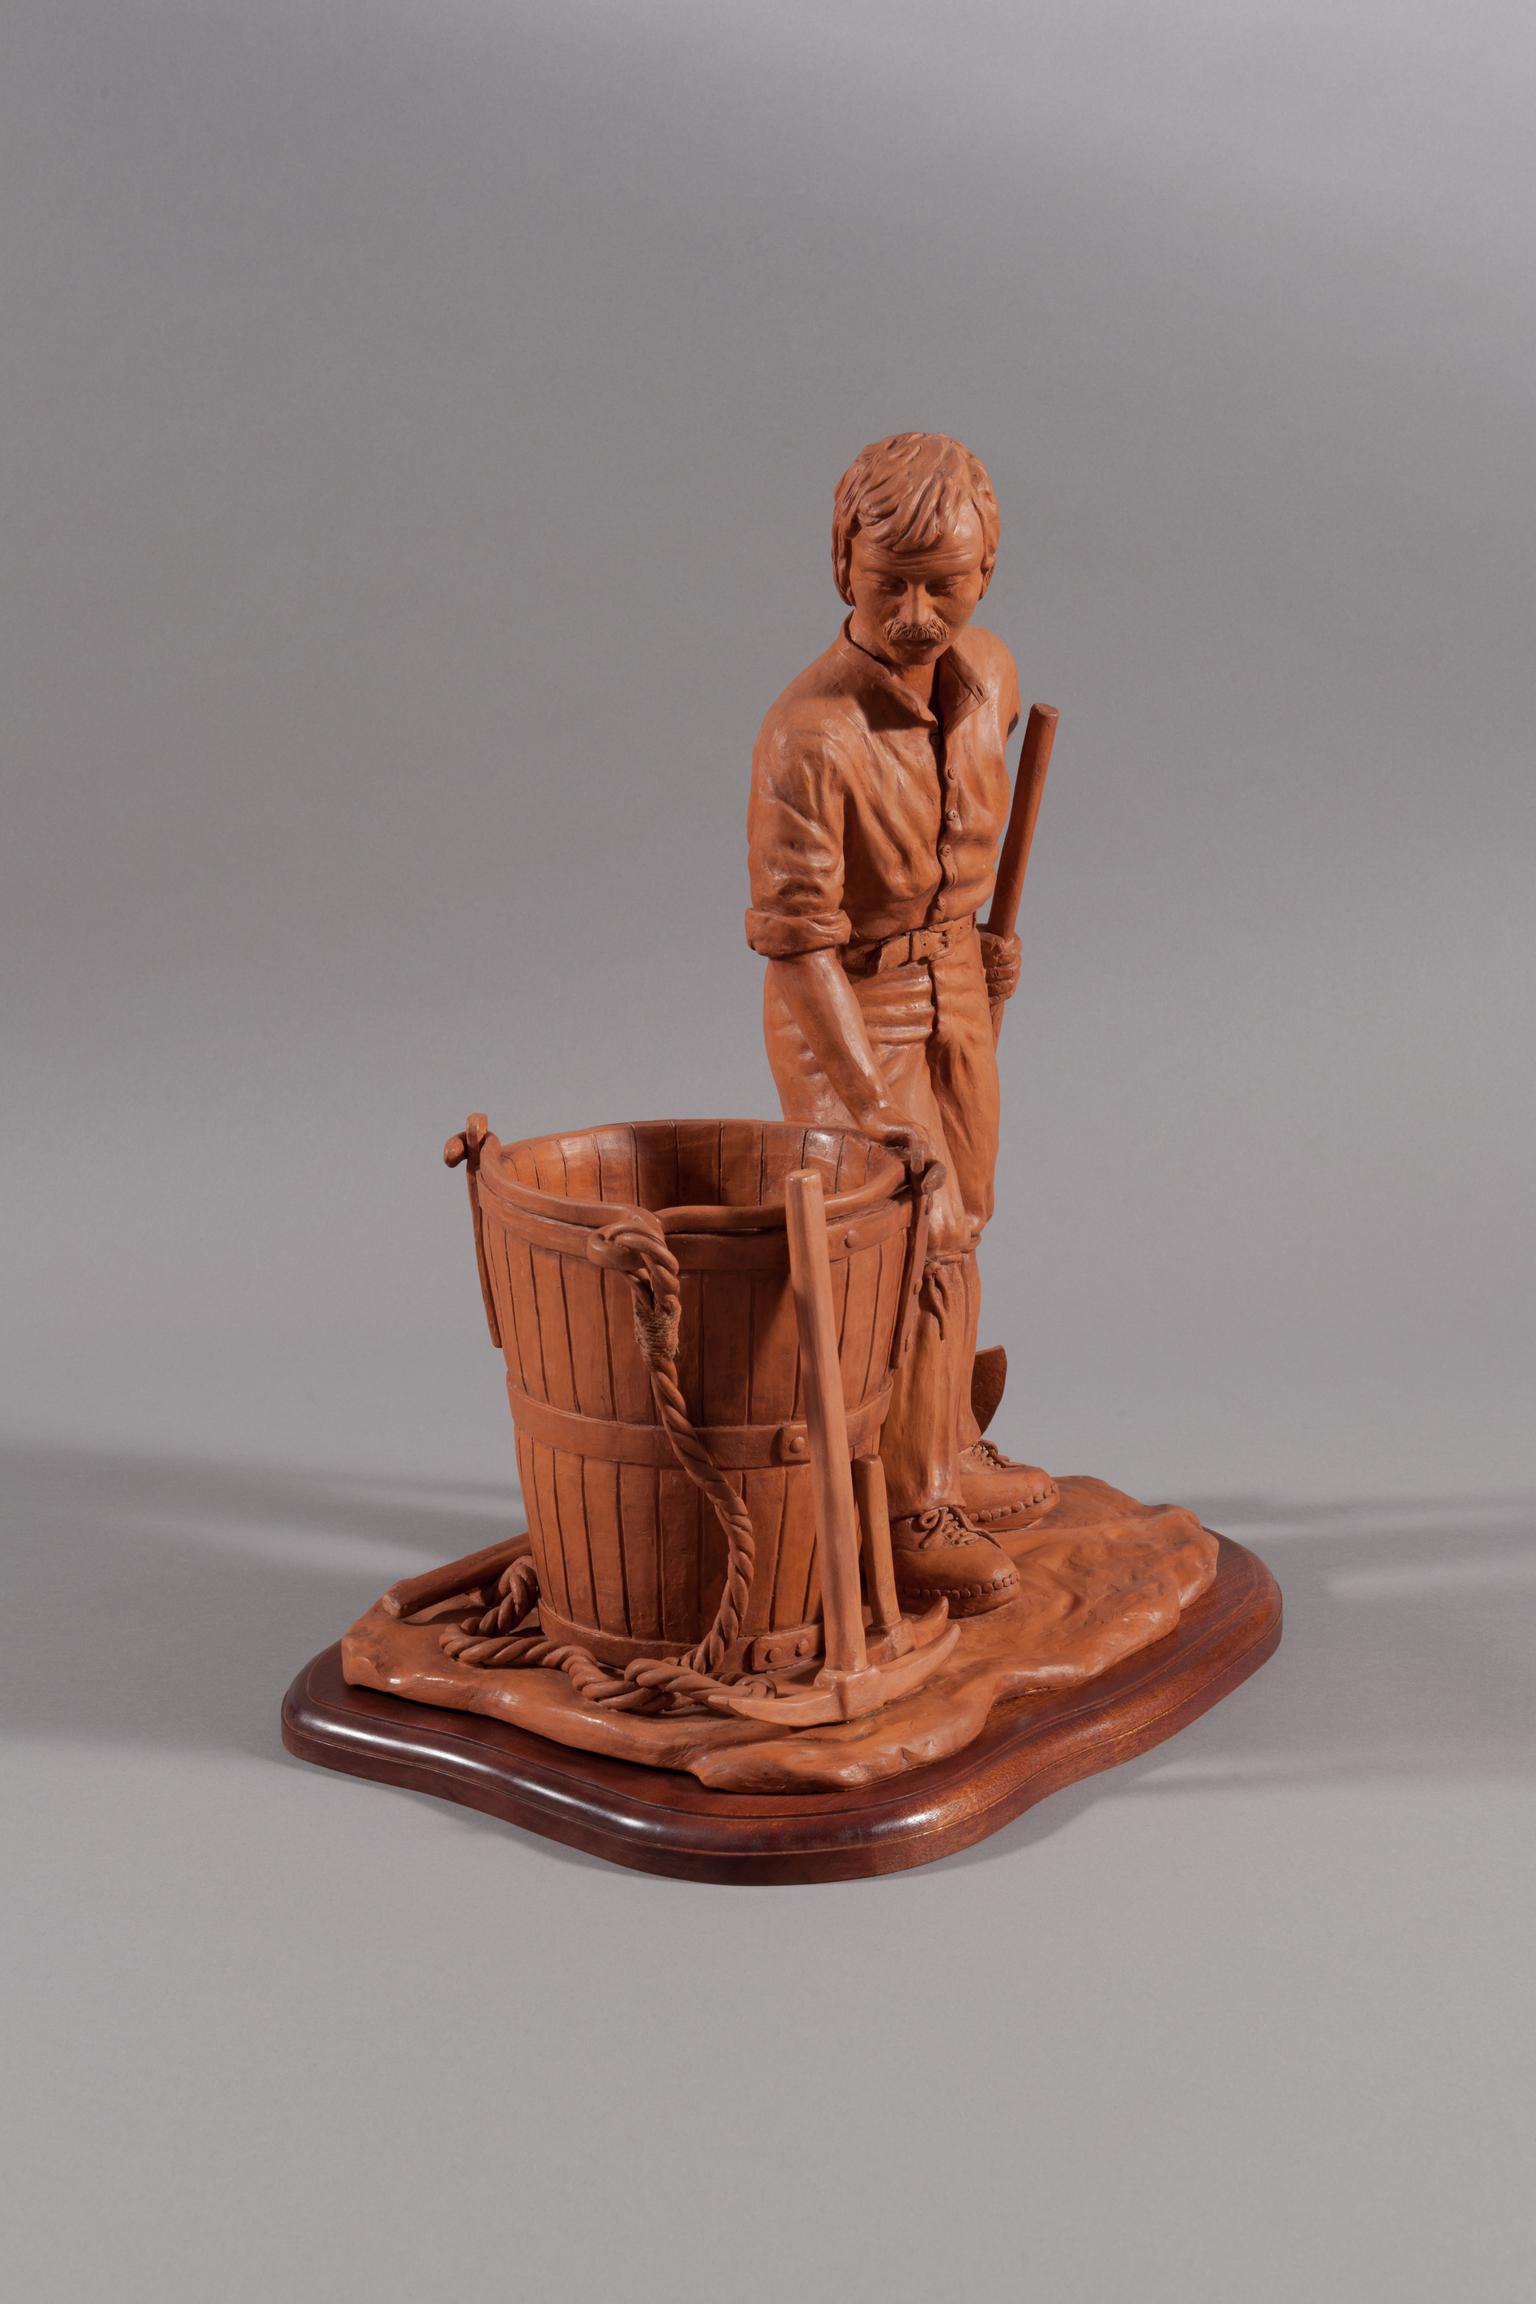 Sculpture of a copper miner